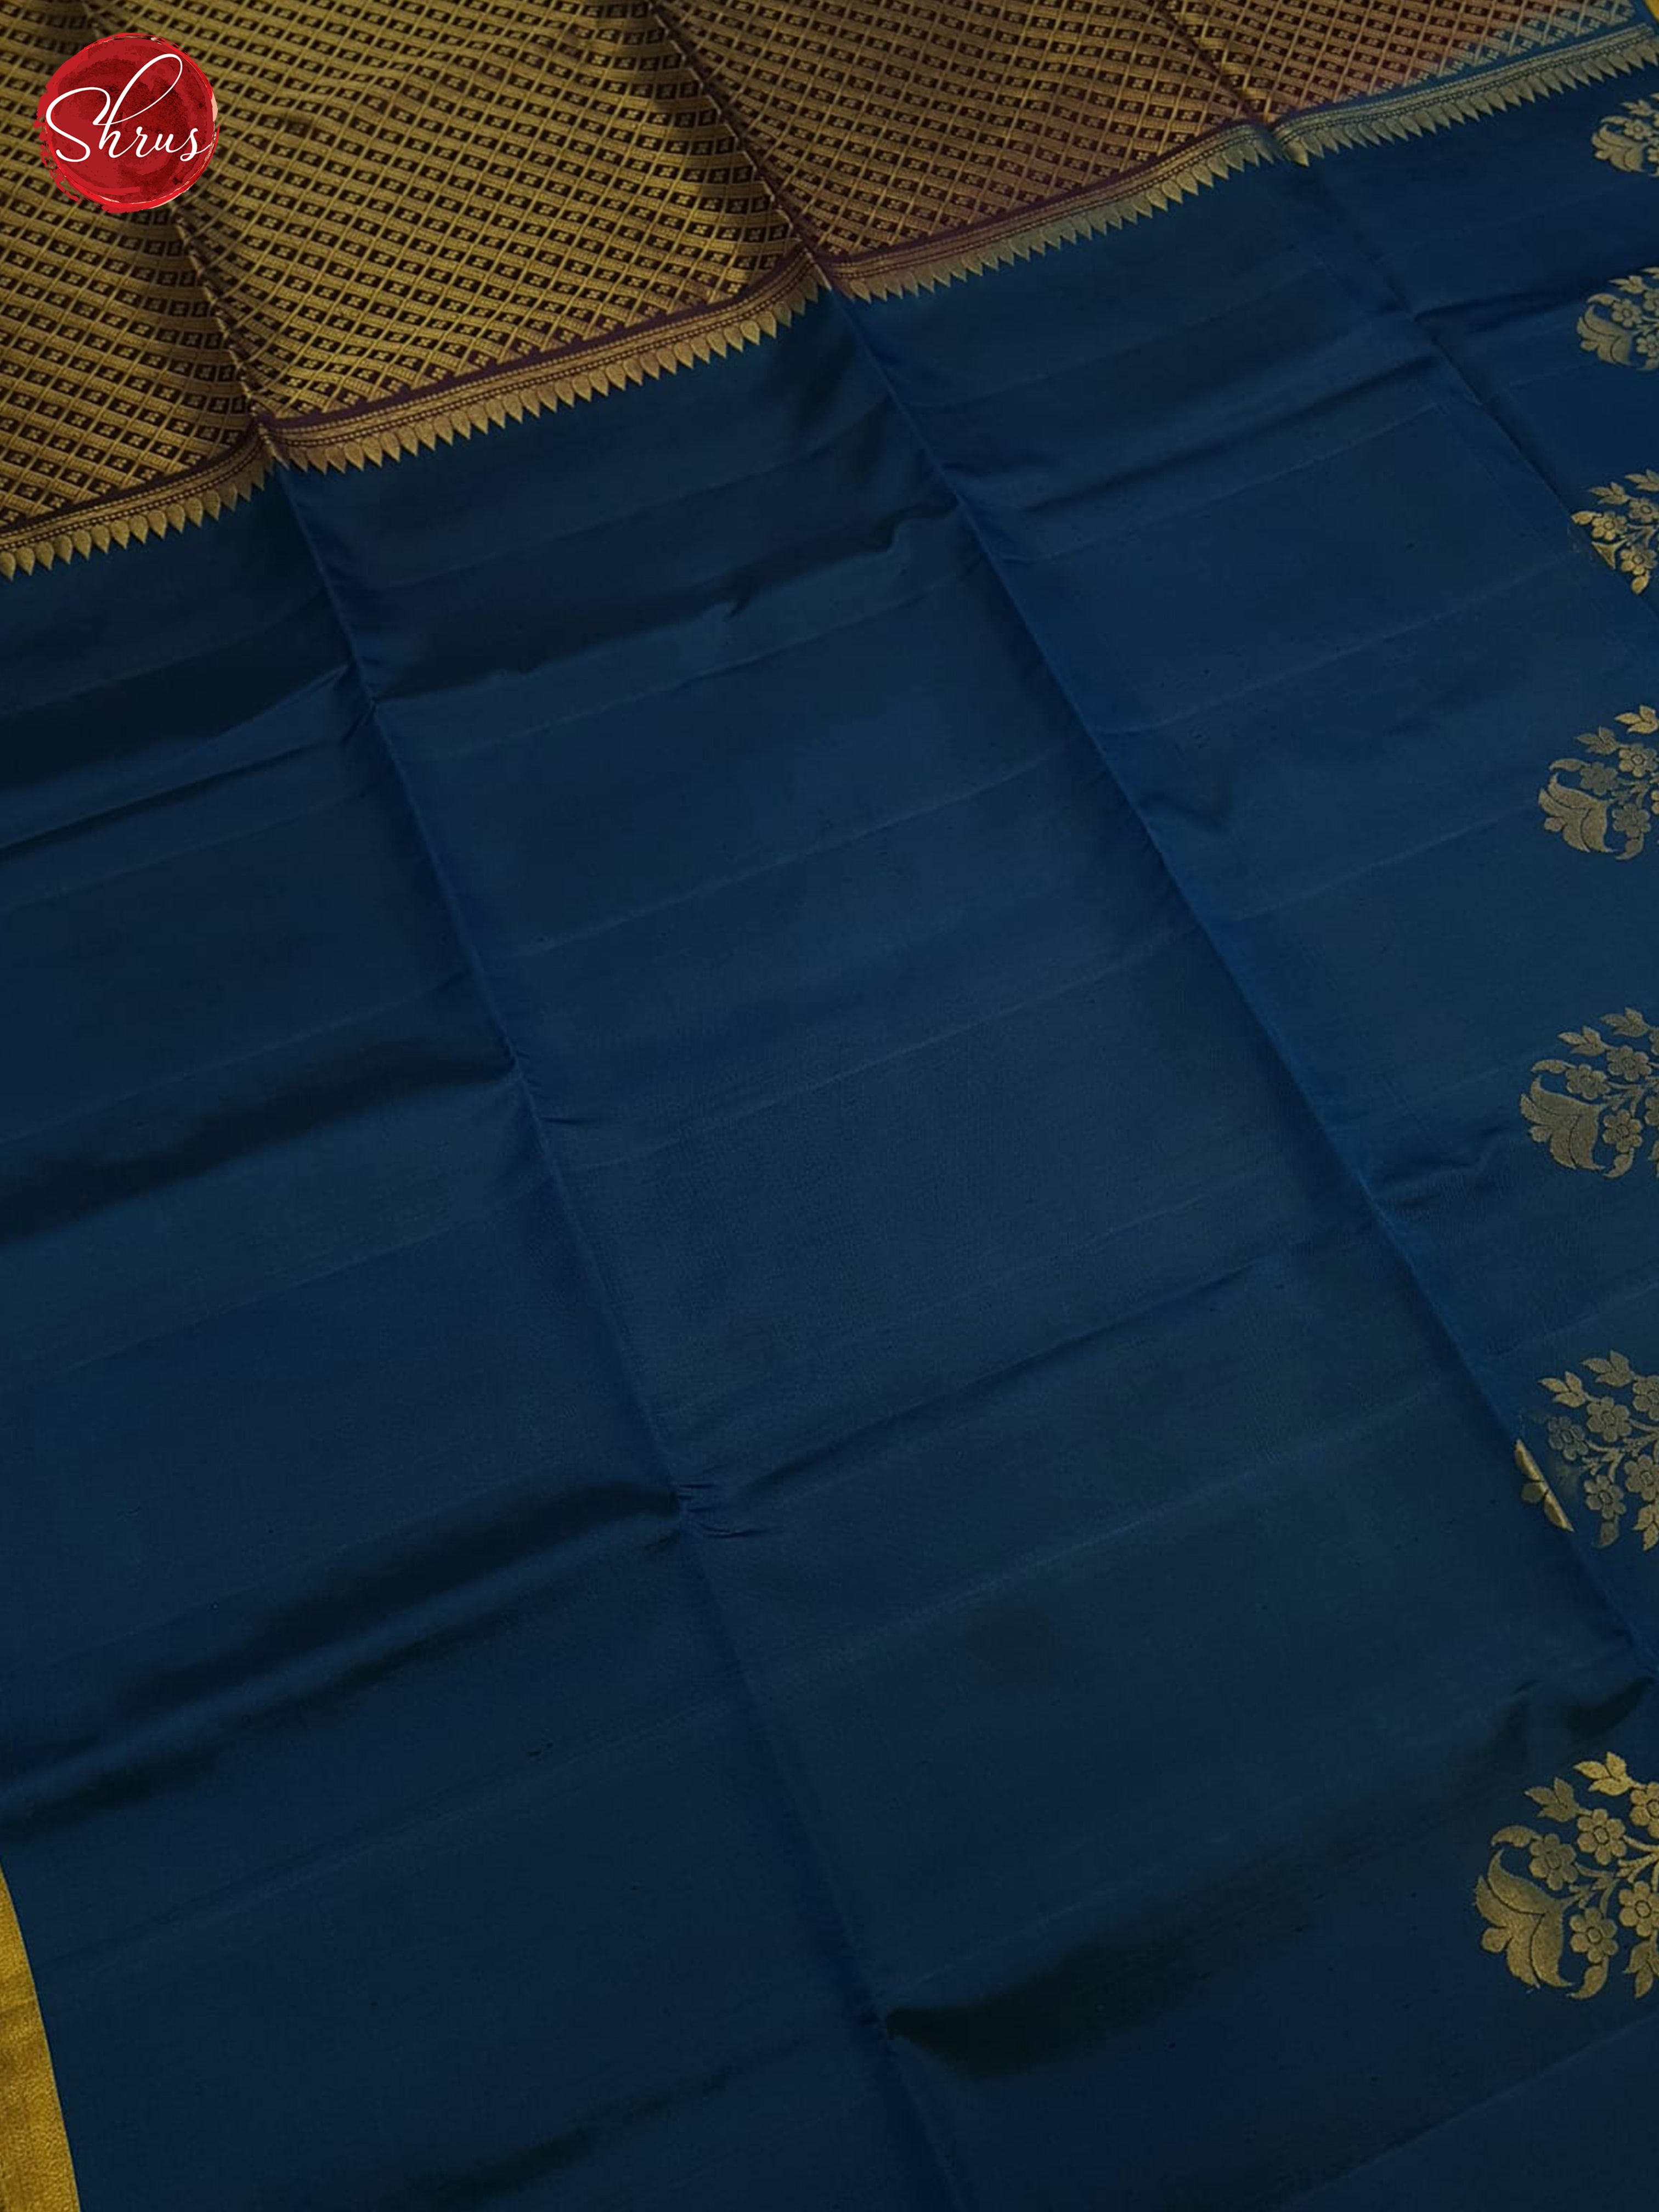 Peacock Blue & Purple - Soft silk Saree - Shop on ShrusEternity.com